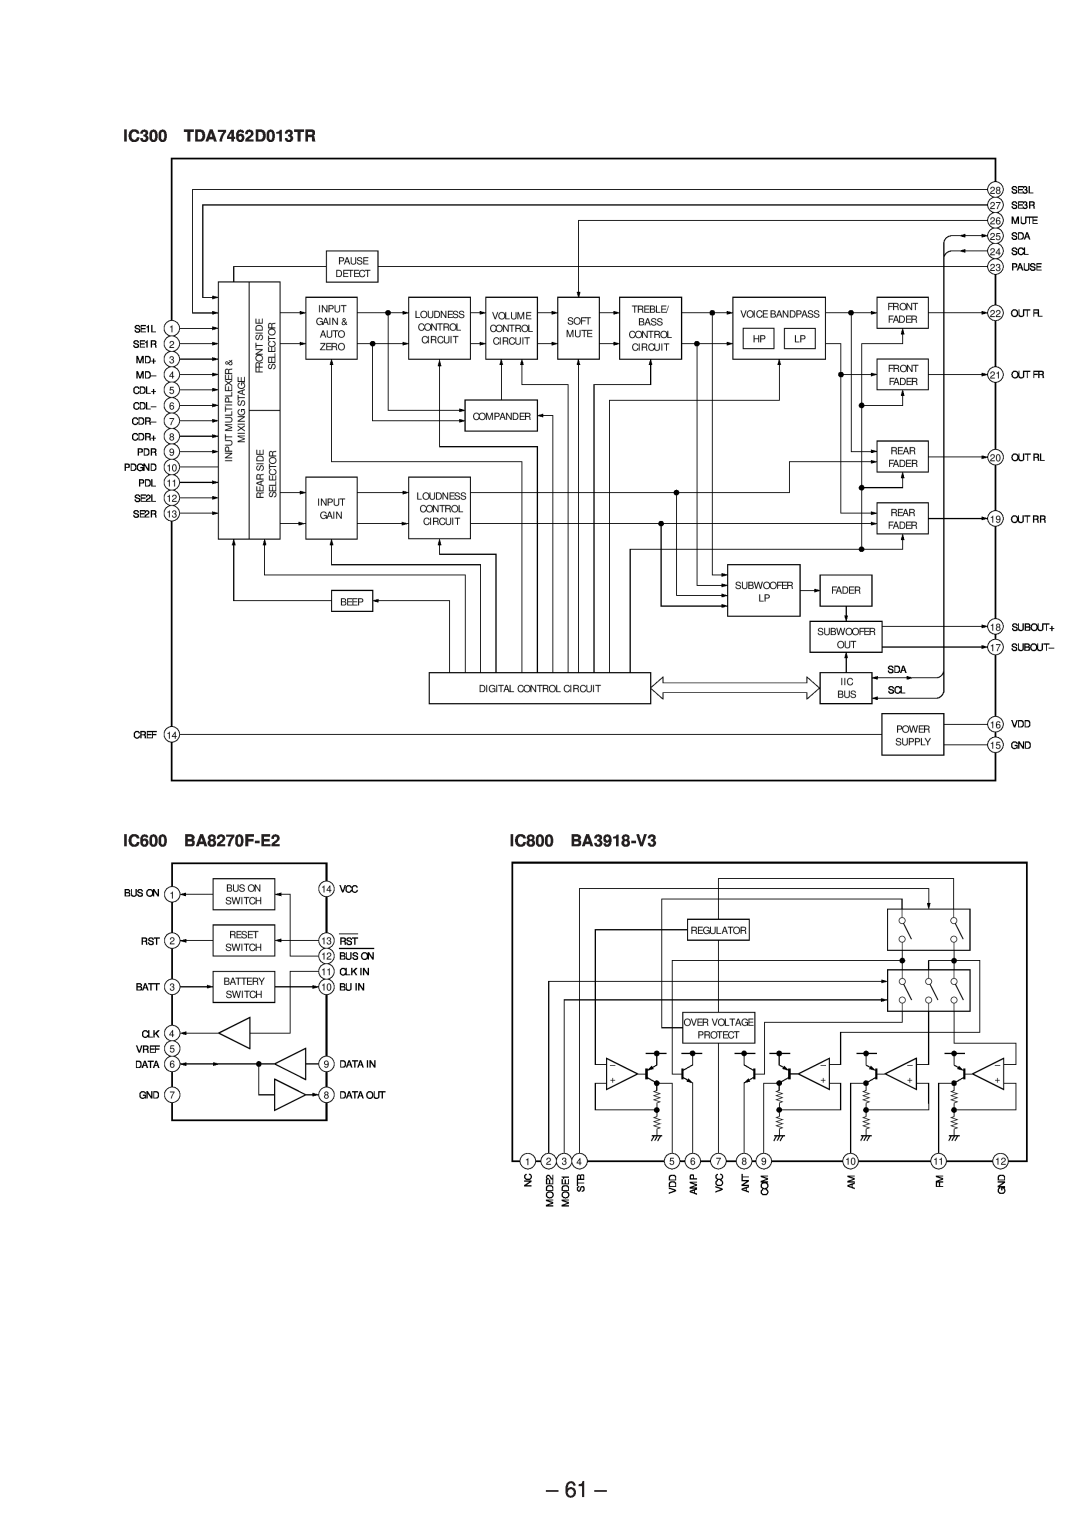 Sony MDX-C5970R service manual 61, IC300, TDA7462D013TR, IC600, BA8270F-E2, IC800, BA3918-V3 